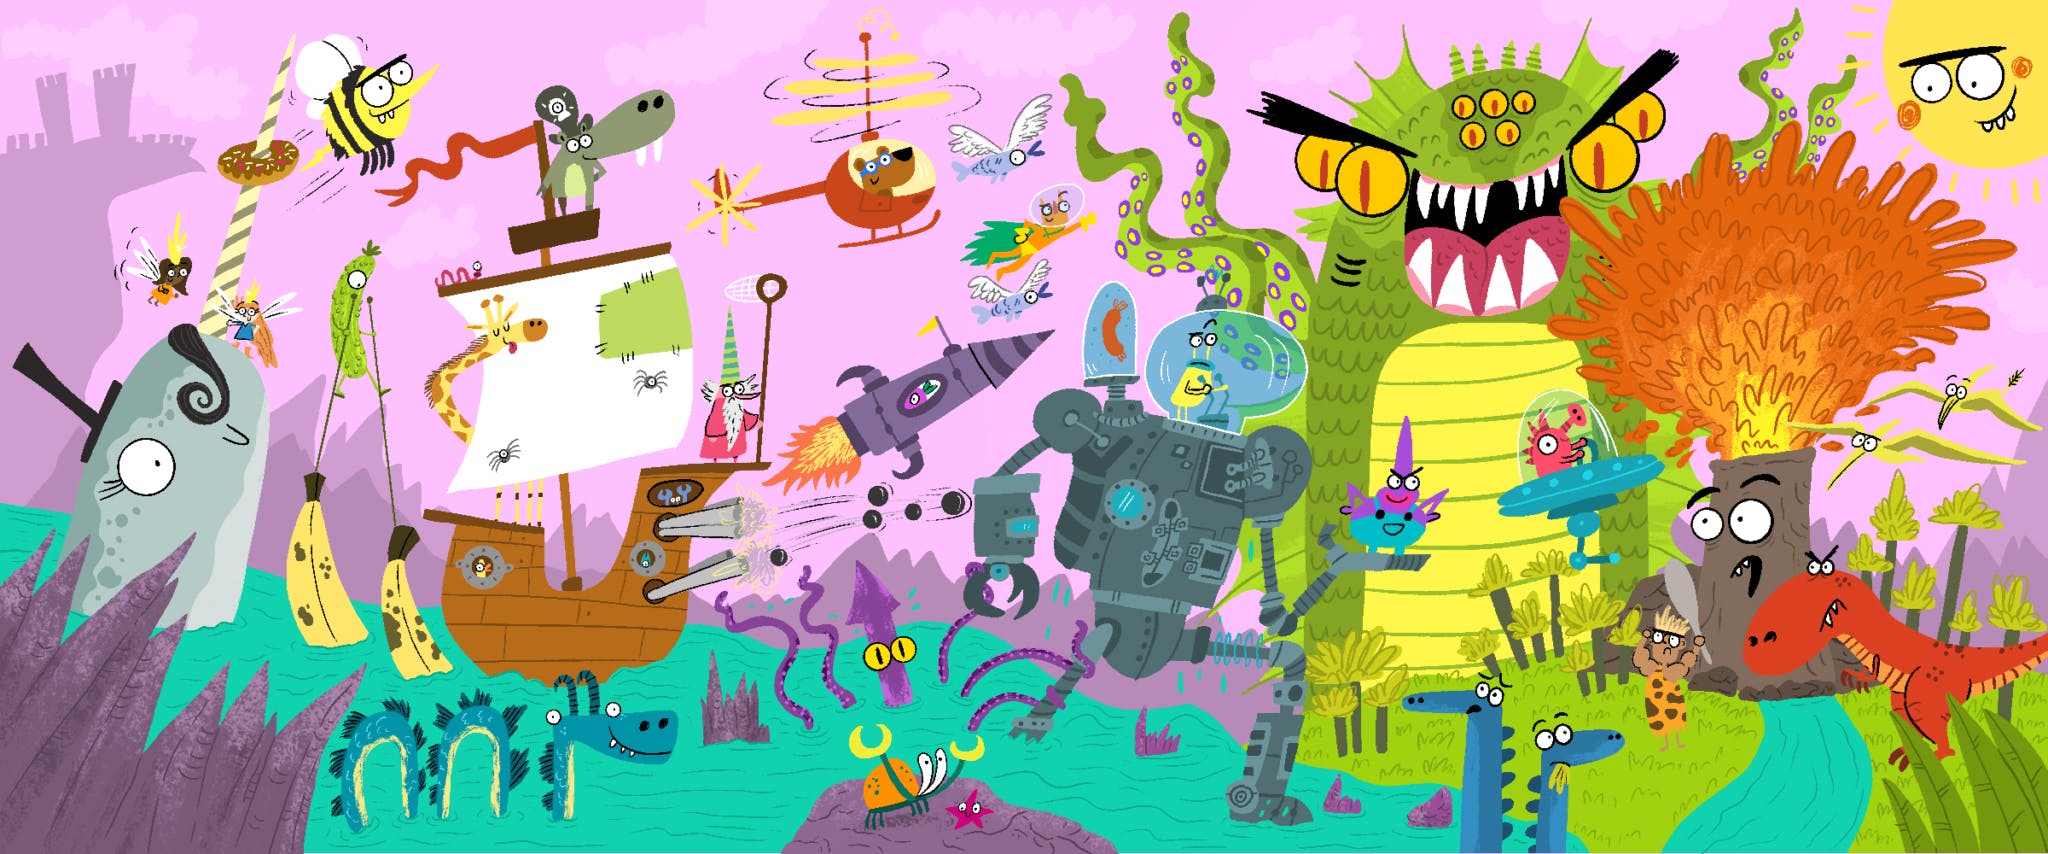 Colourful illustration featuring fantastical creatures